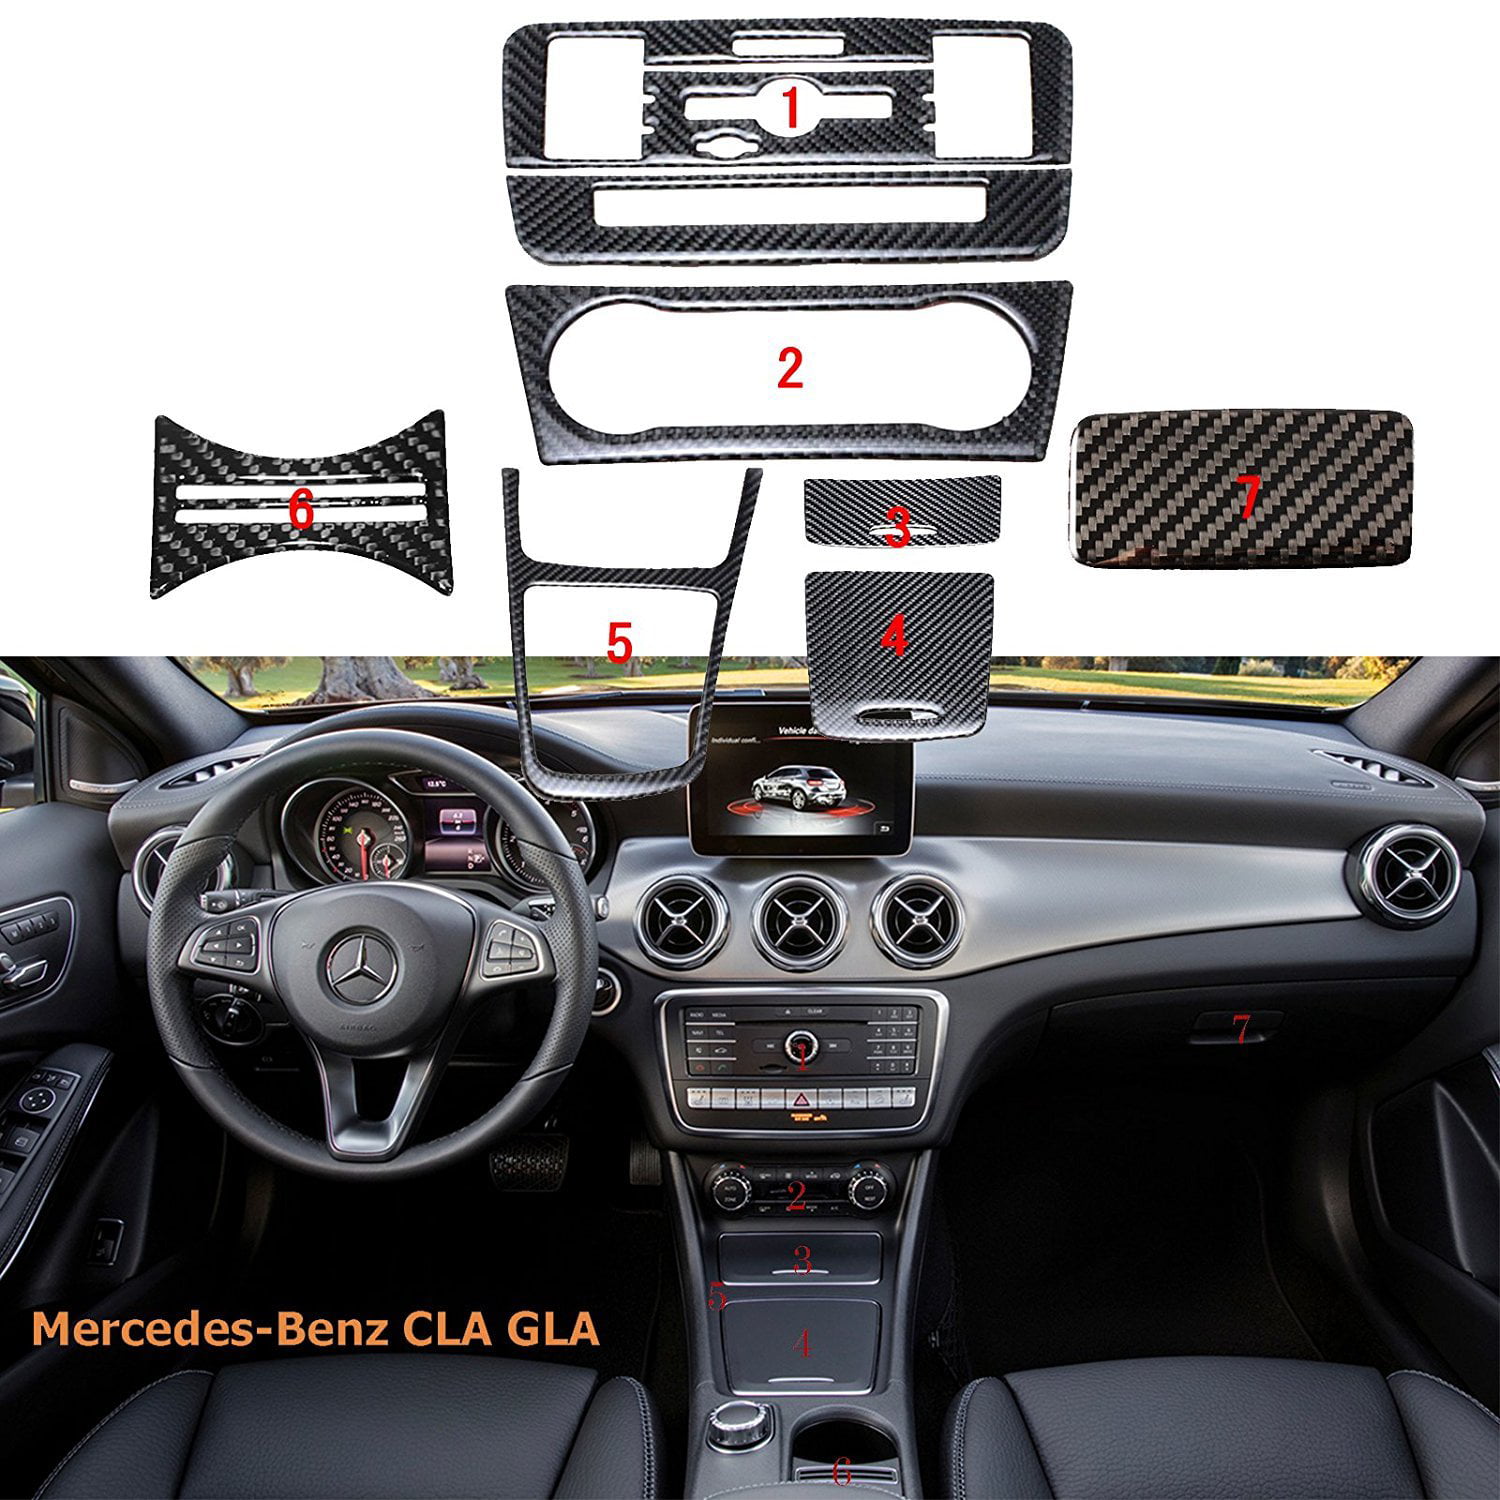 ABS Chrome Door Handle Trim For Mercedes Benz GLA200 GLA250 CLA180 CLA200 CLA250 